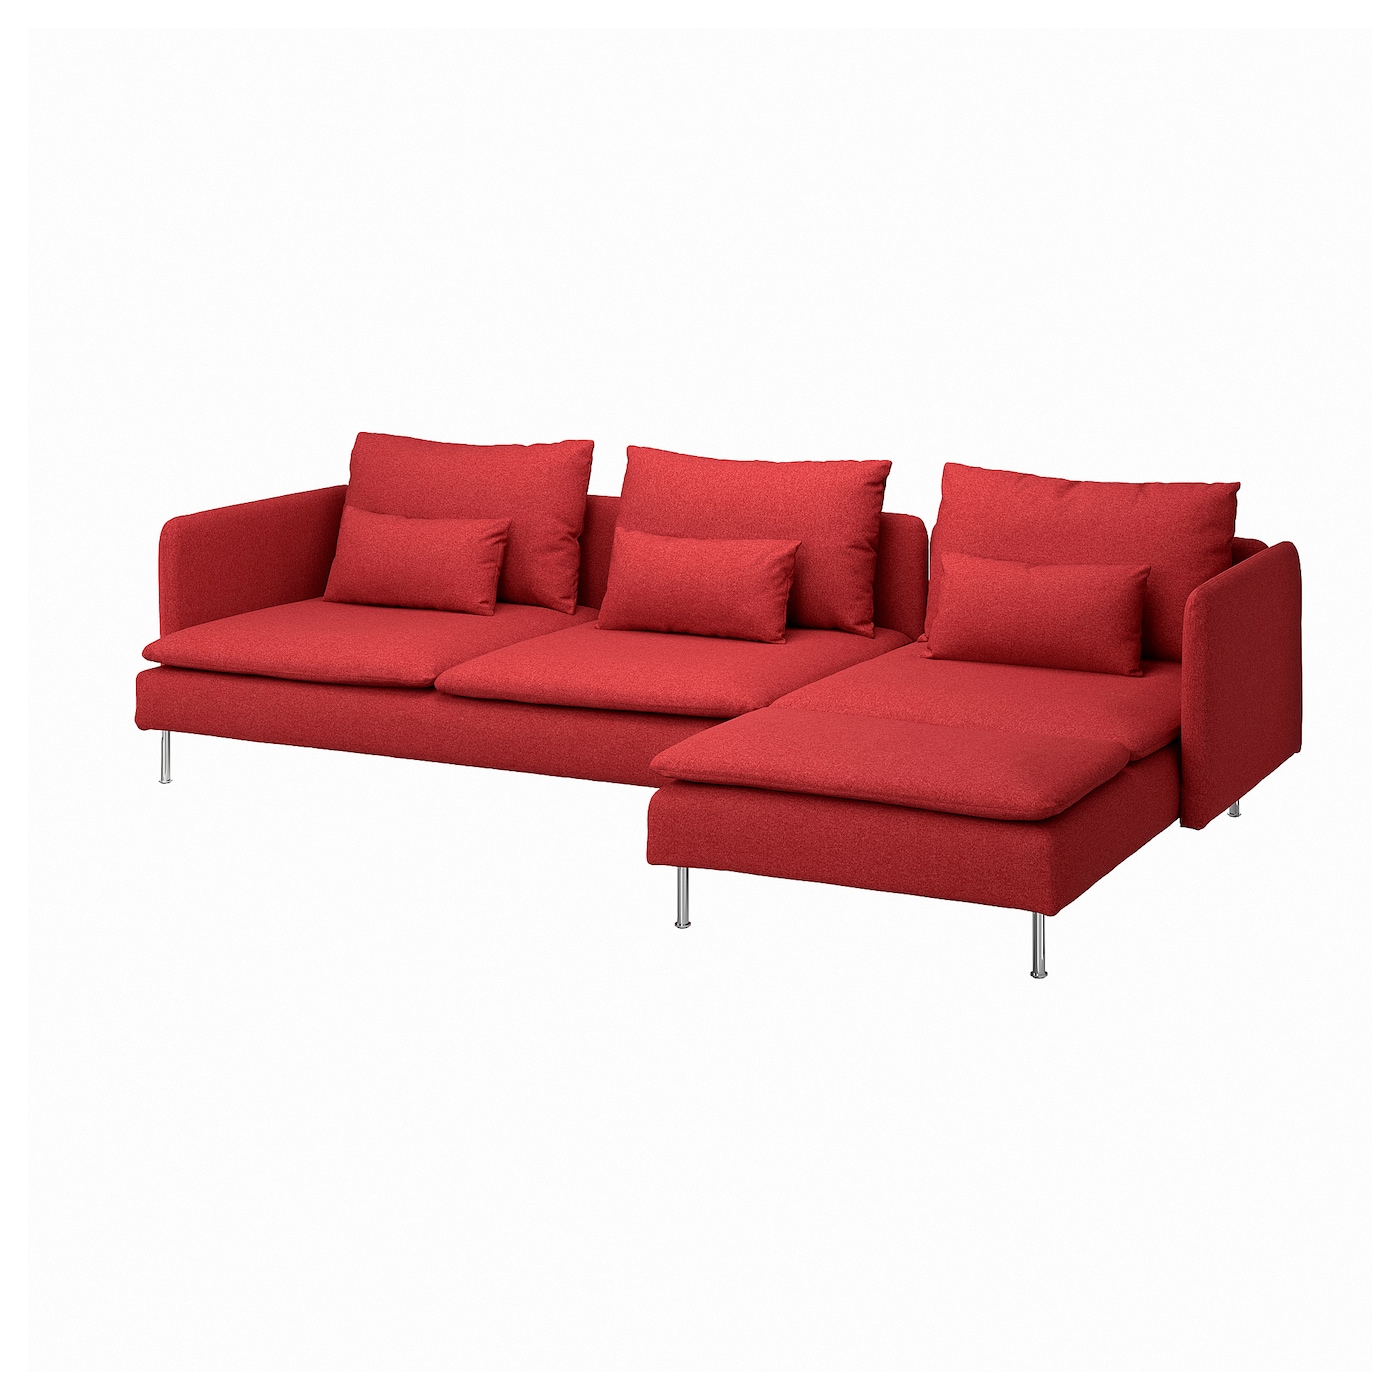 СЁДЕРХАМН 4-местный диван + диван, Тонеруд красный SODERHAMN IKEA диван диван ру бонс т happy deep ocean